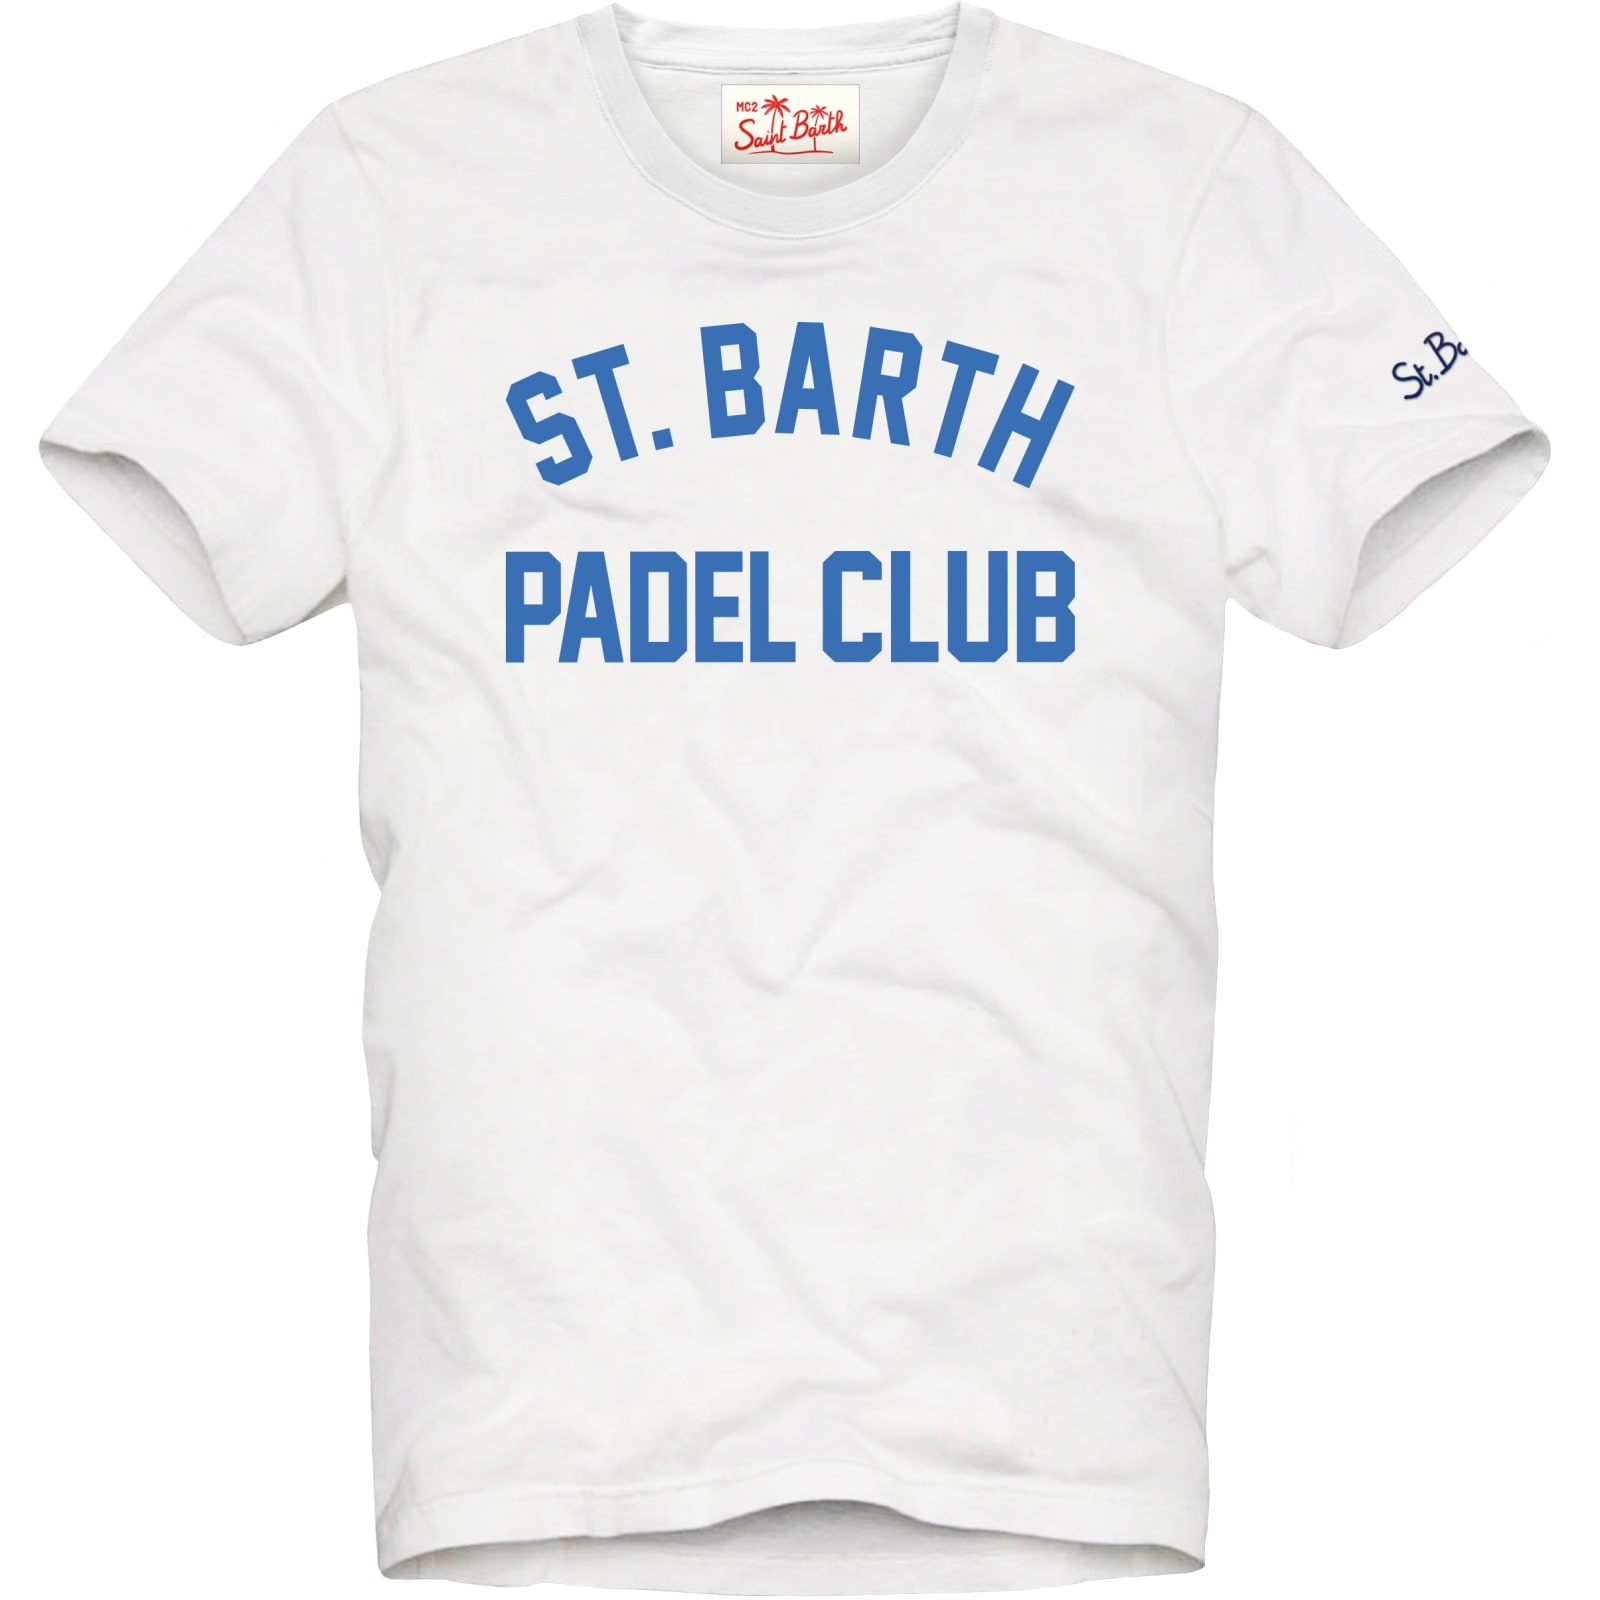 Mc2 Saint Barth Man Cotton T-shirt With St. Barth Padel Club Print